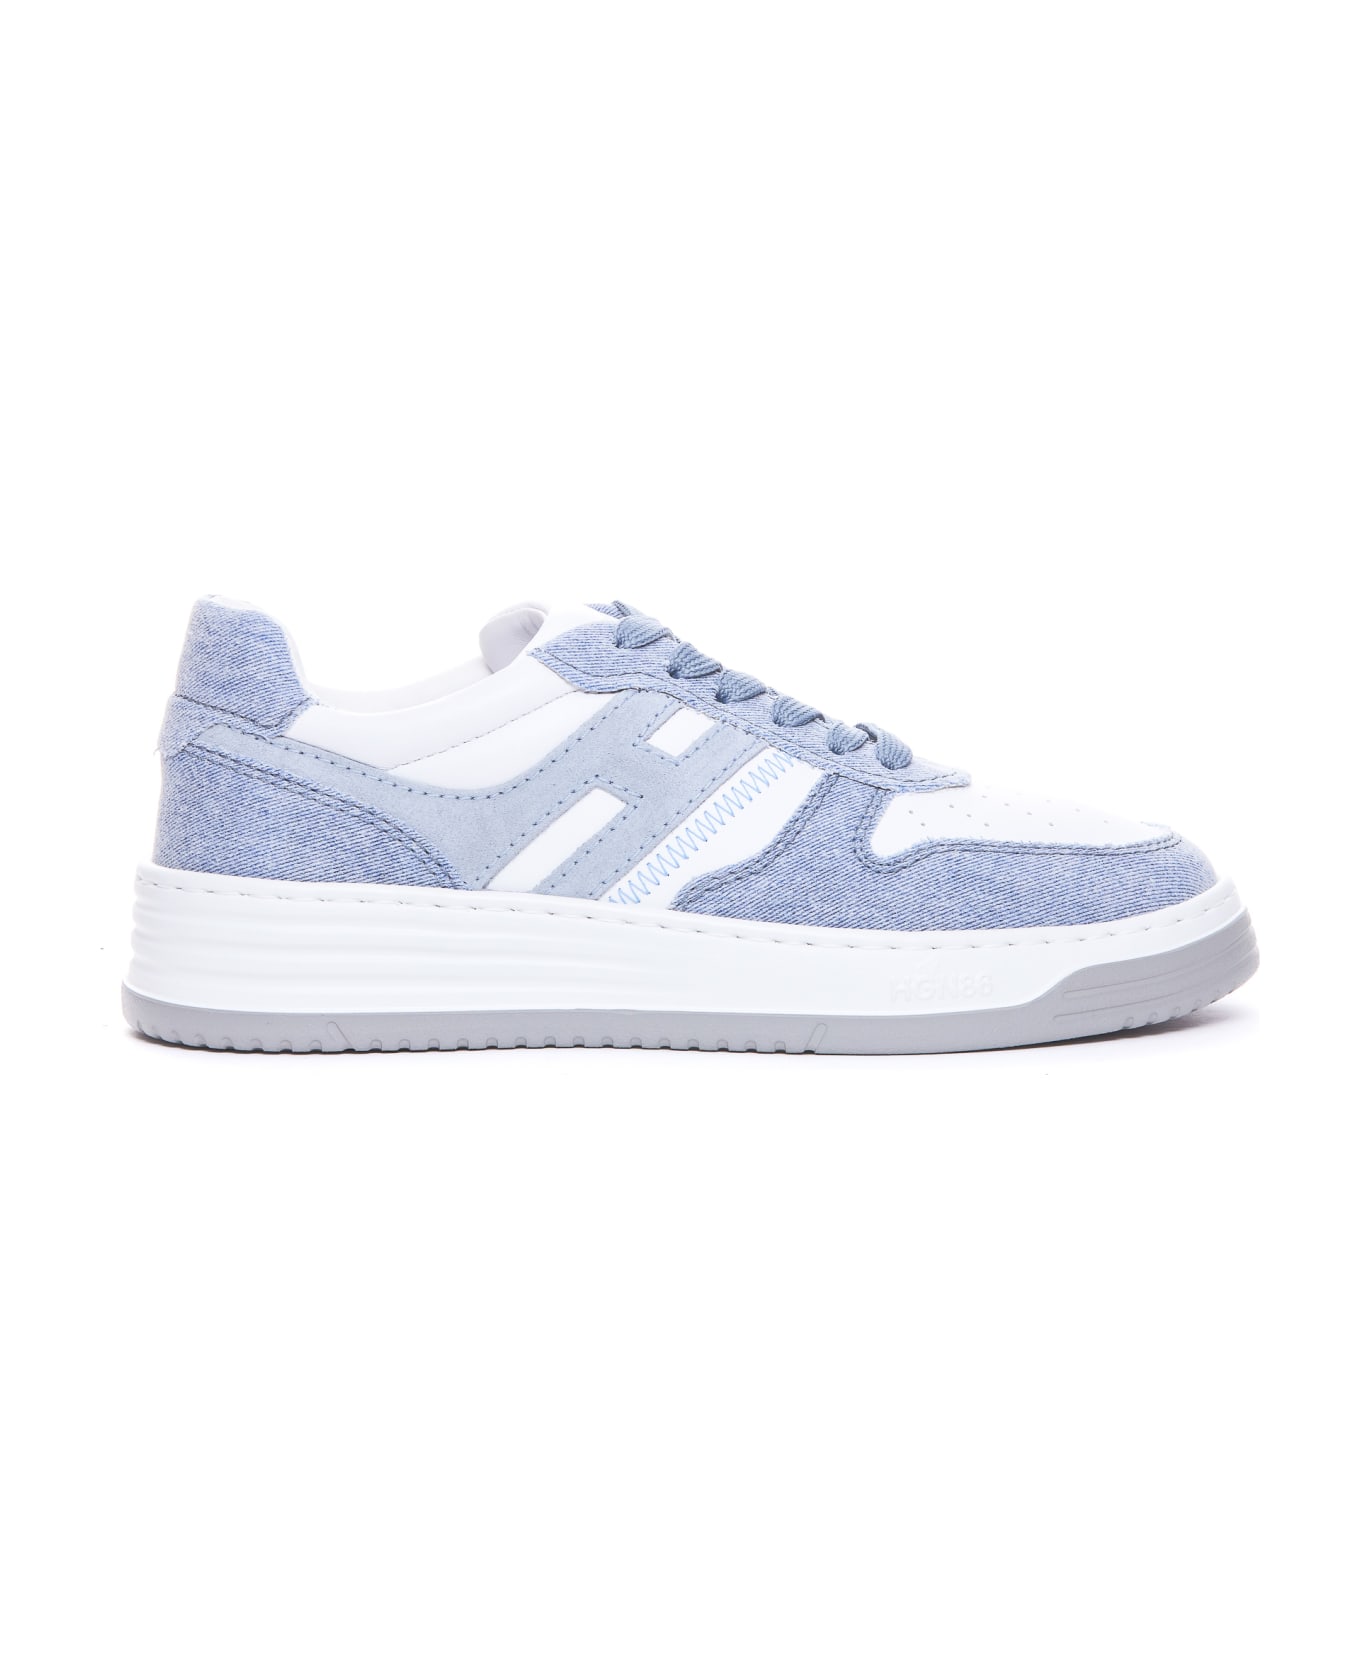 Hogan H630 Sneakers - WHITE/BLUE